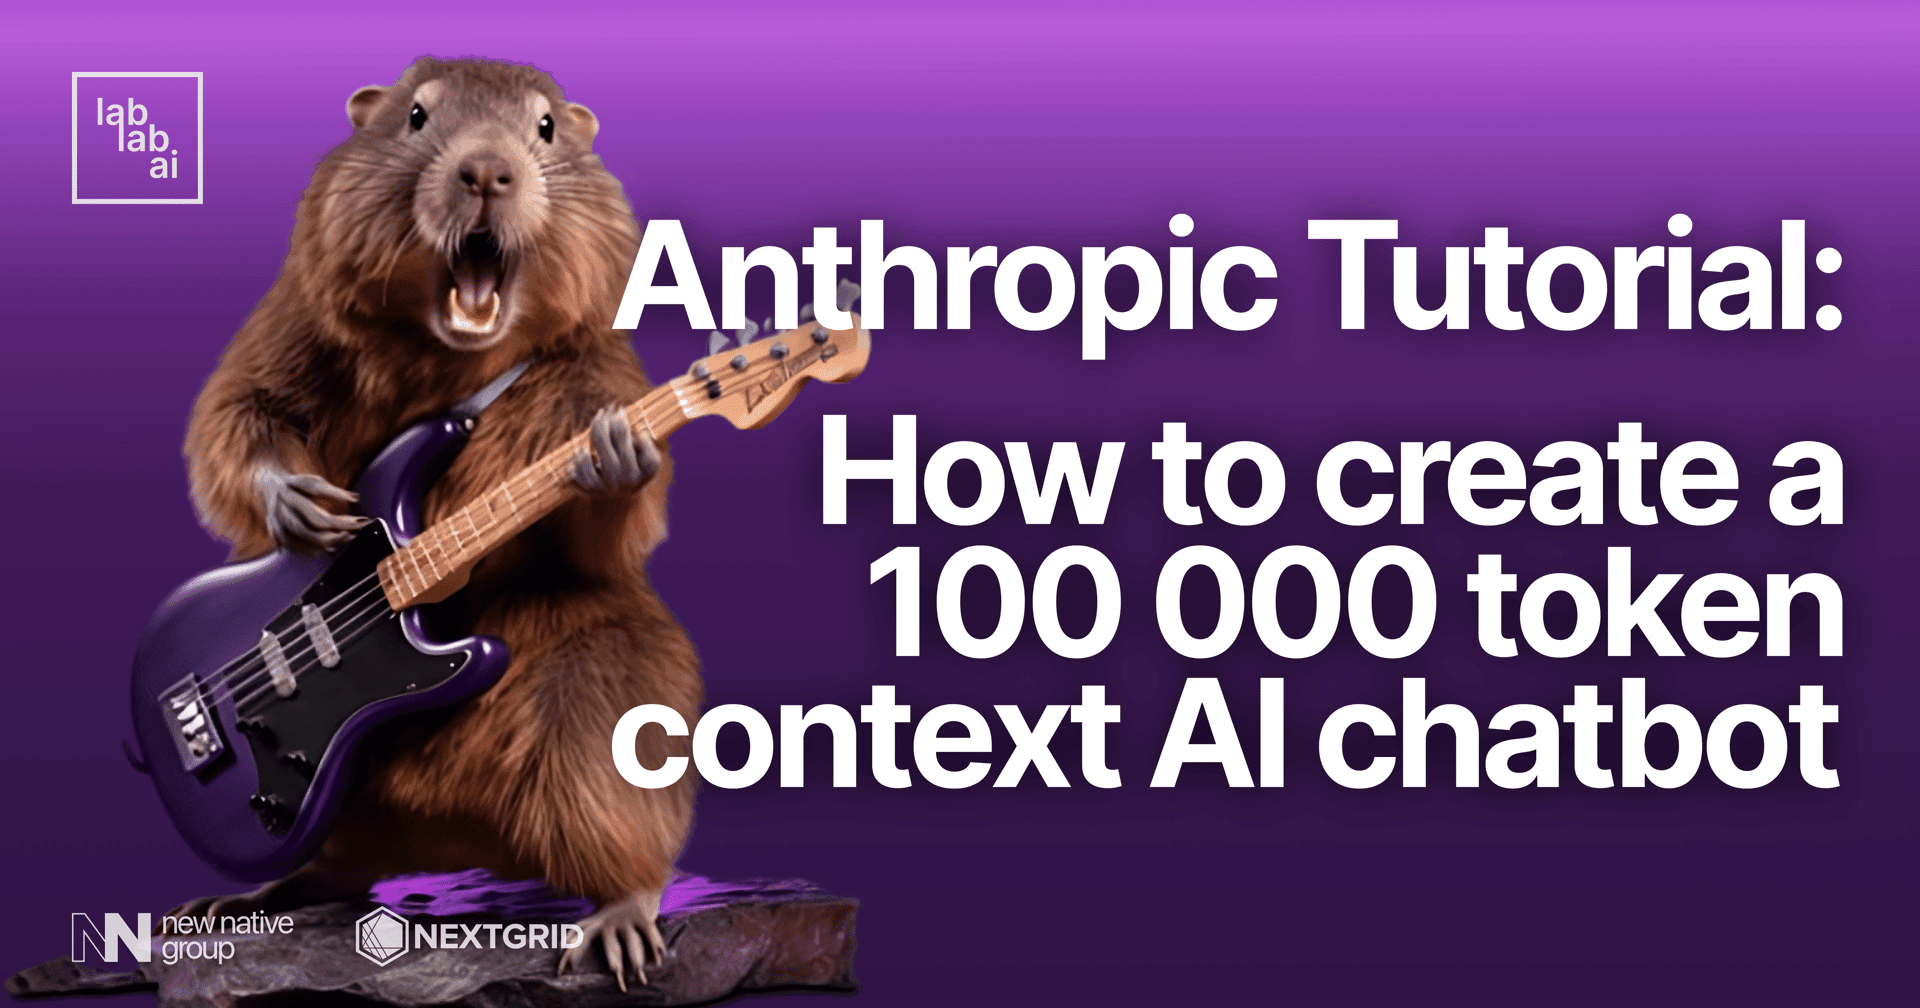 Anthropic tutorial: how to create a 100 000 token context AI chatbot